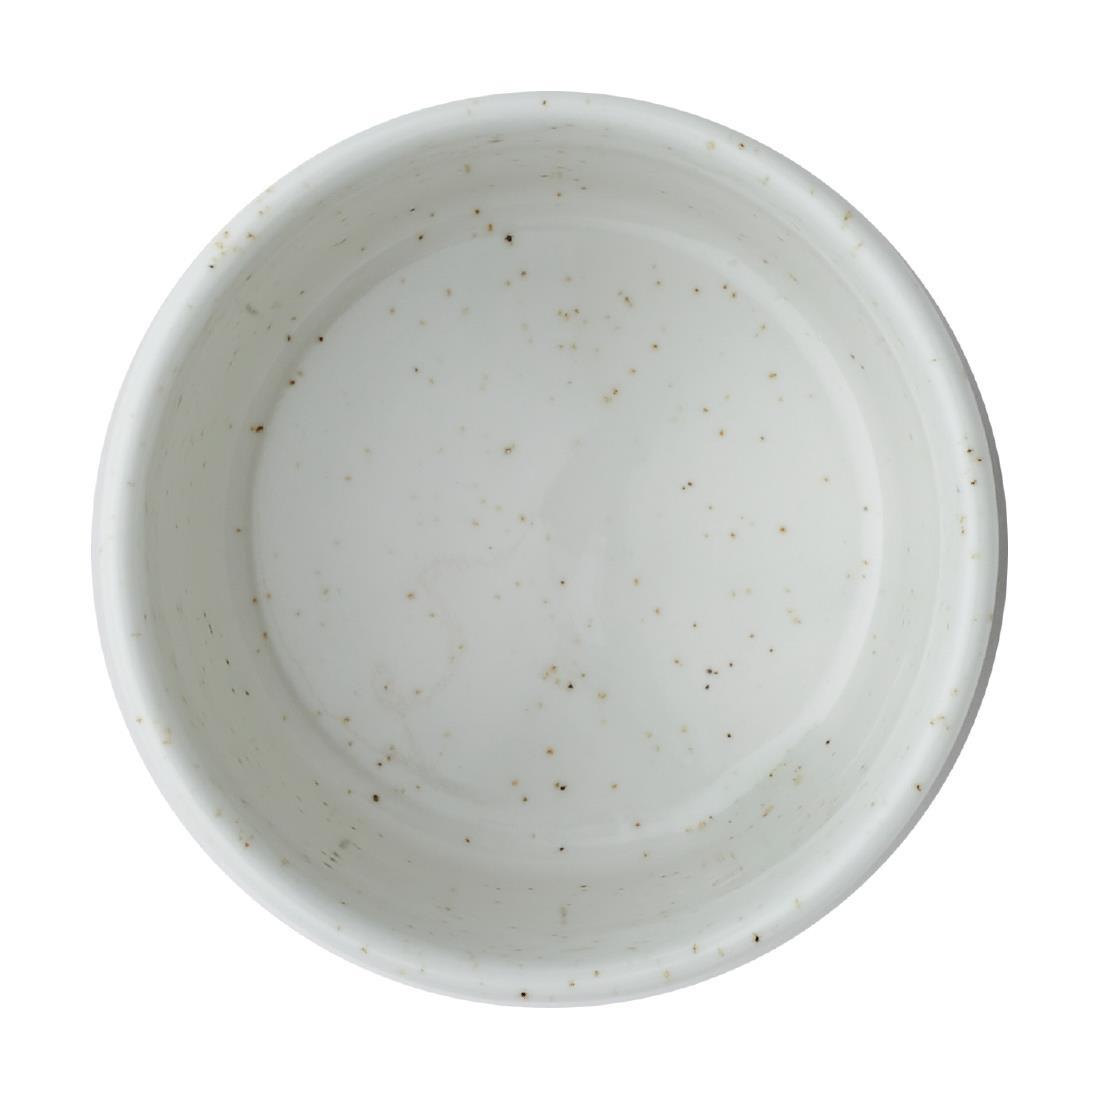 Siena Nourish Straight Sided Small Bowls Barley White 8oz (Pack of 12)